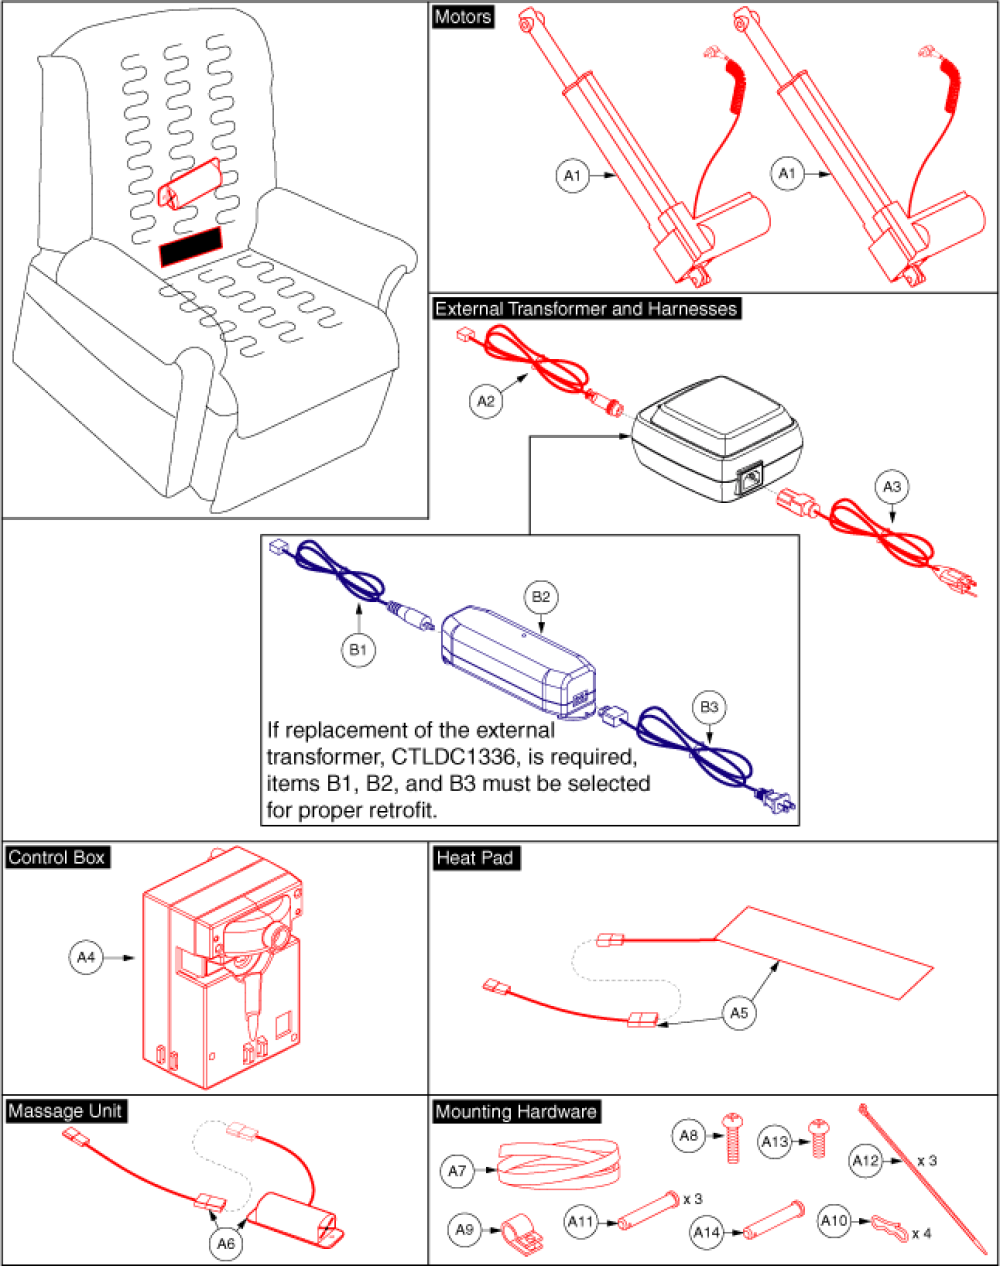 Motor Assembly - Infinite H/m Options (gen. 2) parts diagram